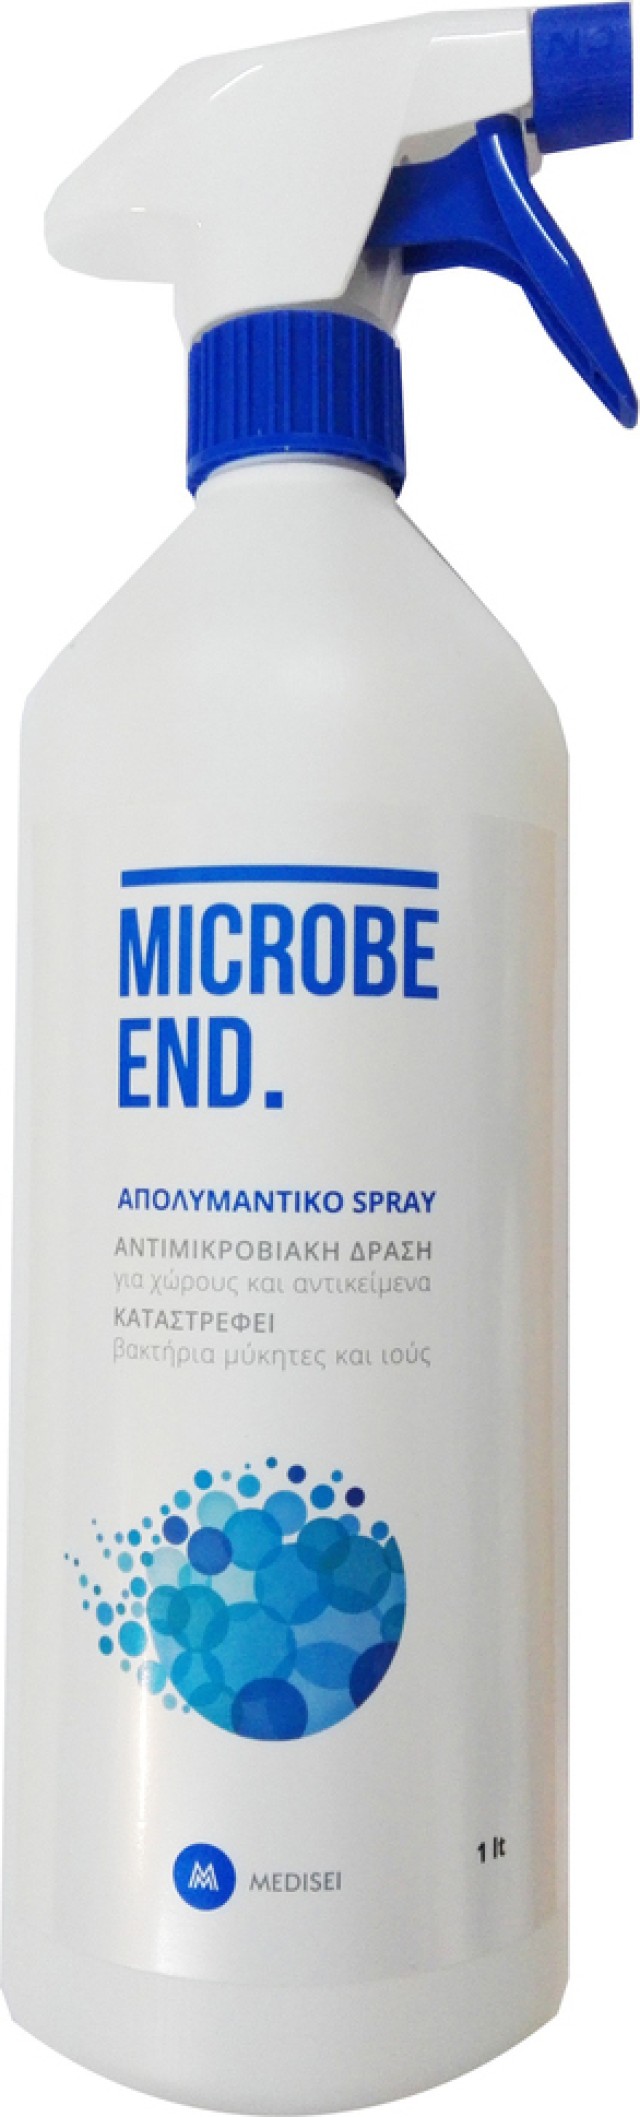 Medisei Microbe End Spray Απολυμαντικό Σπρέϊ με Μικροβιοκτόνο Δράση 1000ml